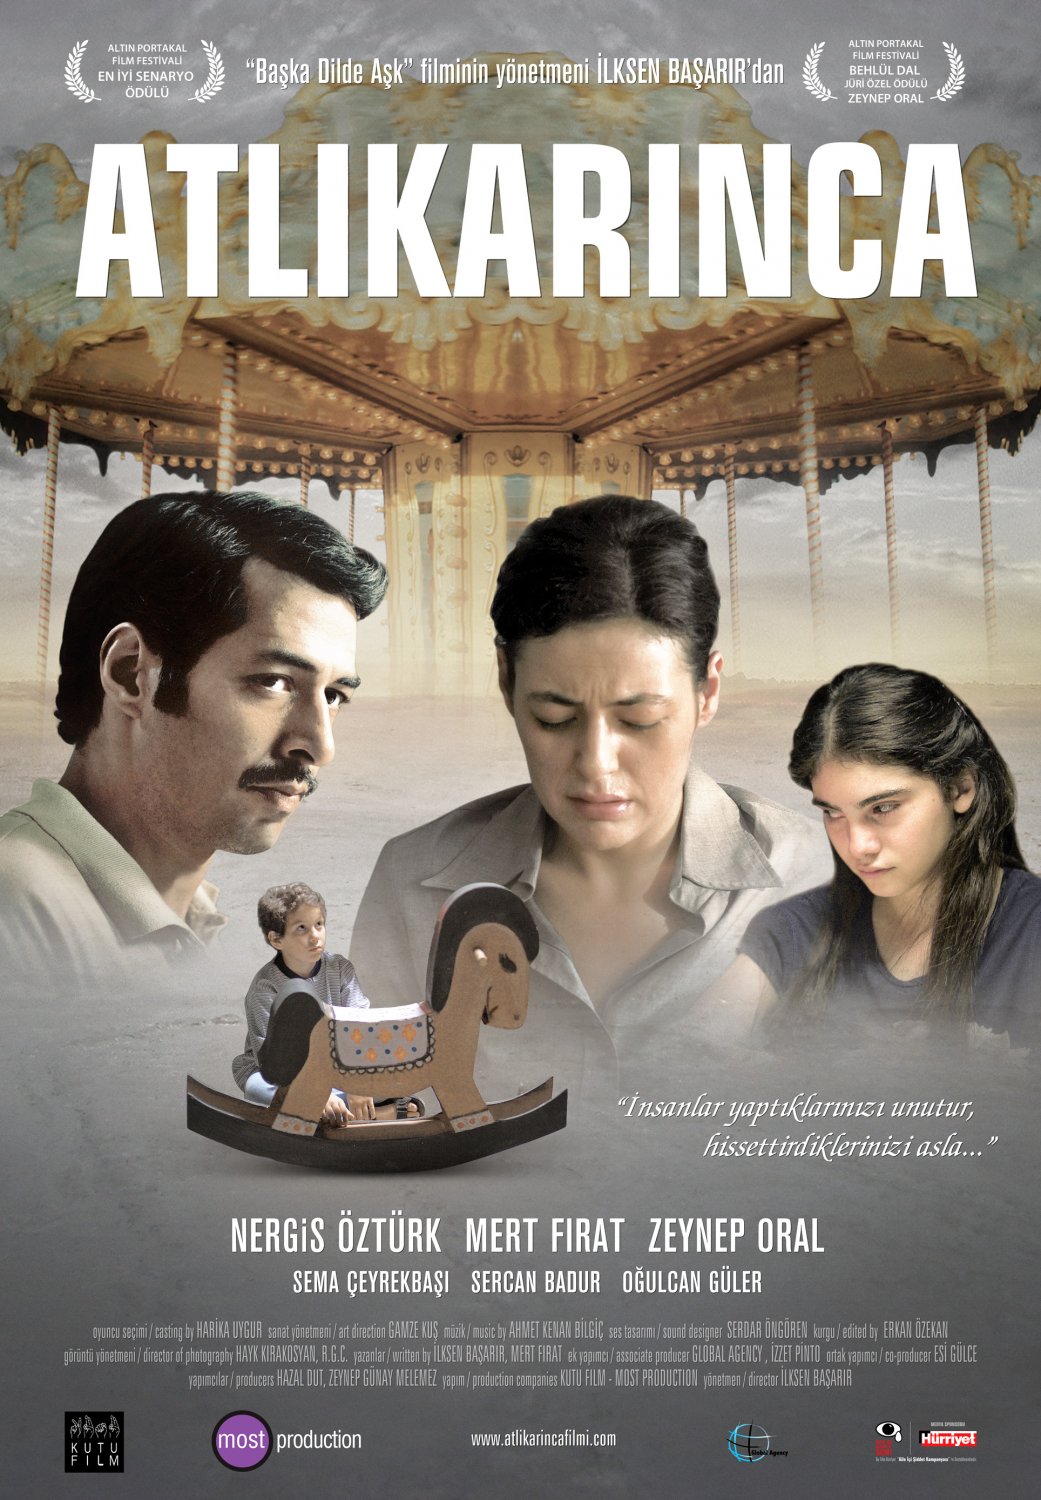 Extra Large Movie Poster Image for Atlikarinca (#2 of 2)